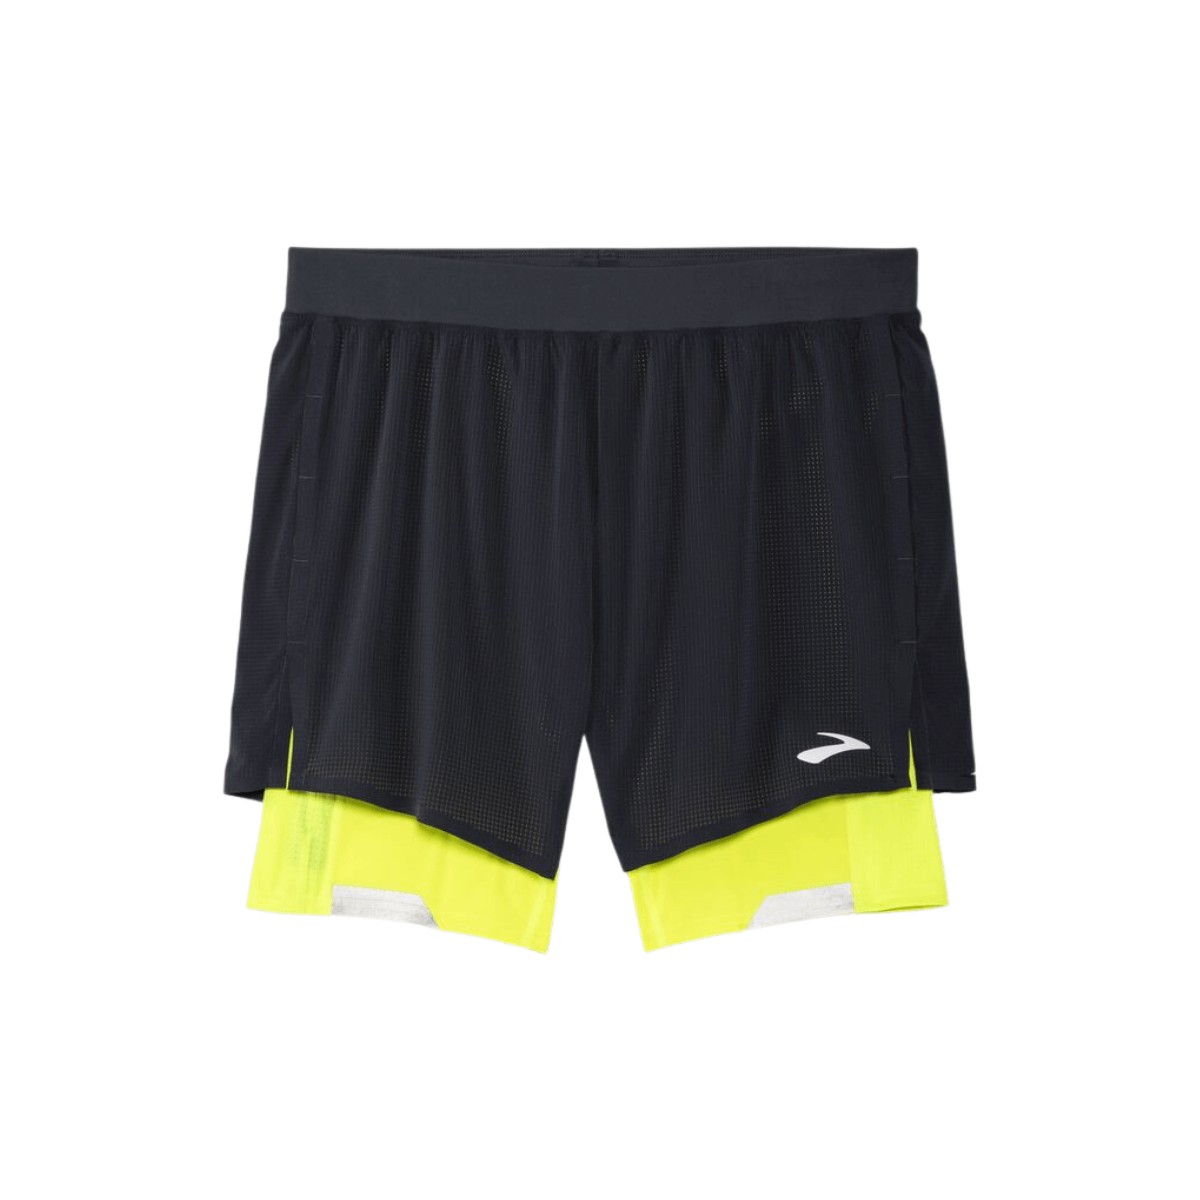 Brooks Run Visible 5 Shorts Black Yellow, Size S